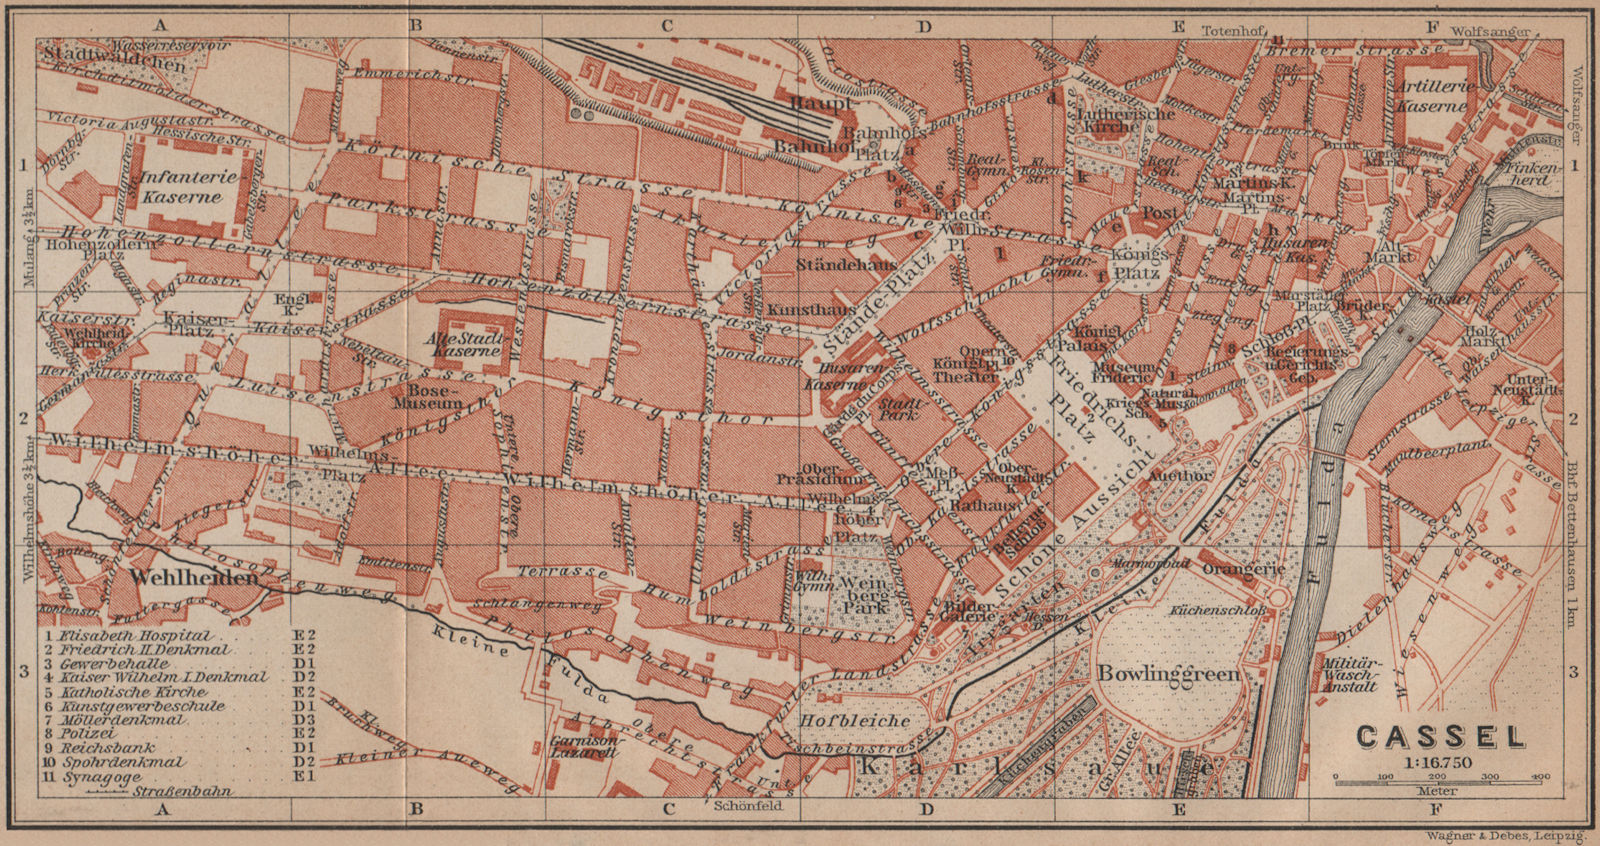 Associate Product KASSEL CASSEL antique town city stadtplan. Hesse. Germany karte 1900 old map